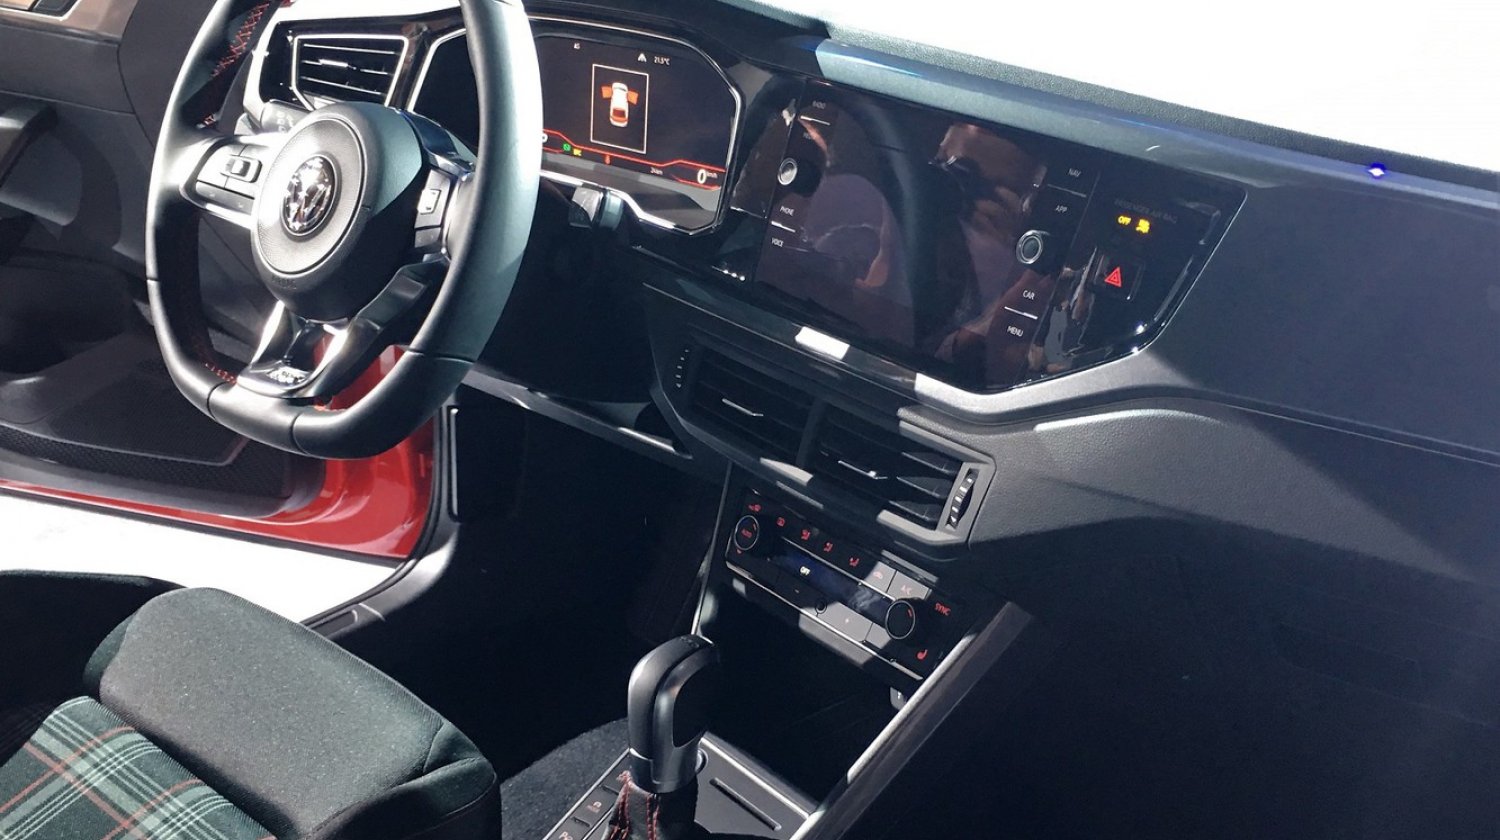 Modernes Armaturenbrett: Das digitale Cockpit im neuen VW Polo